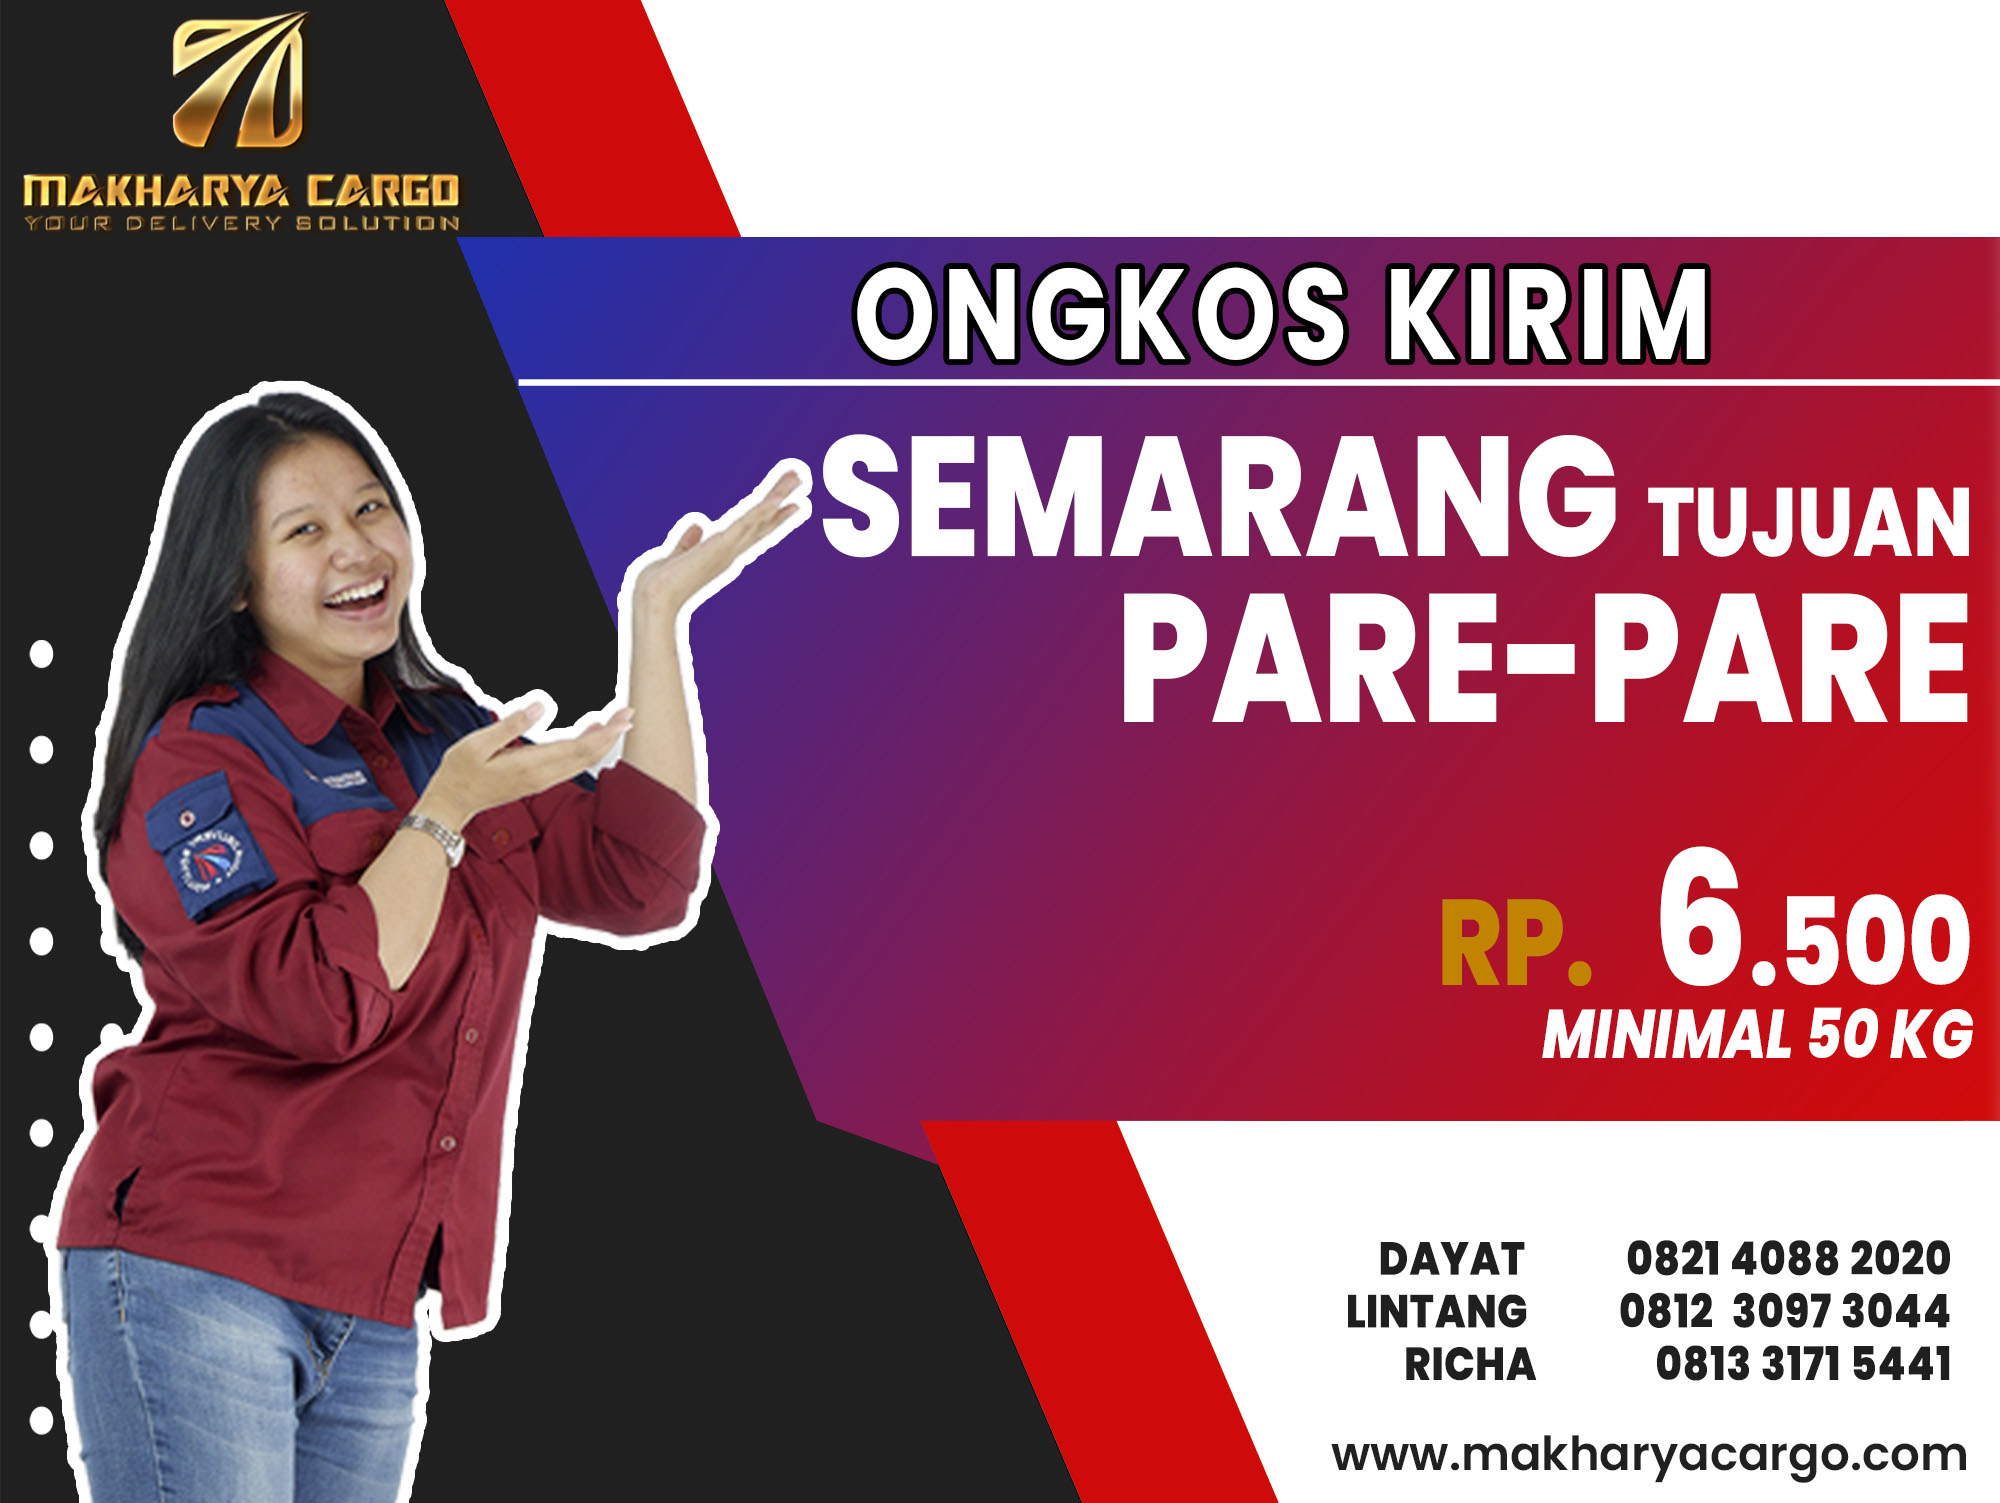 Ongkos Kirim Semarang Pare-Pare